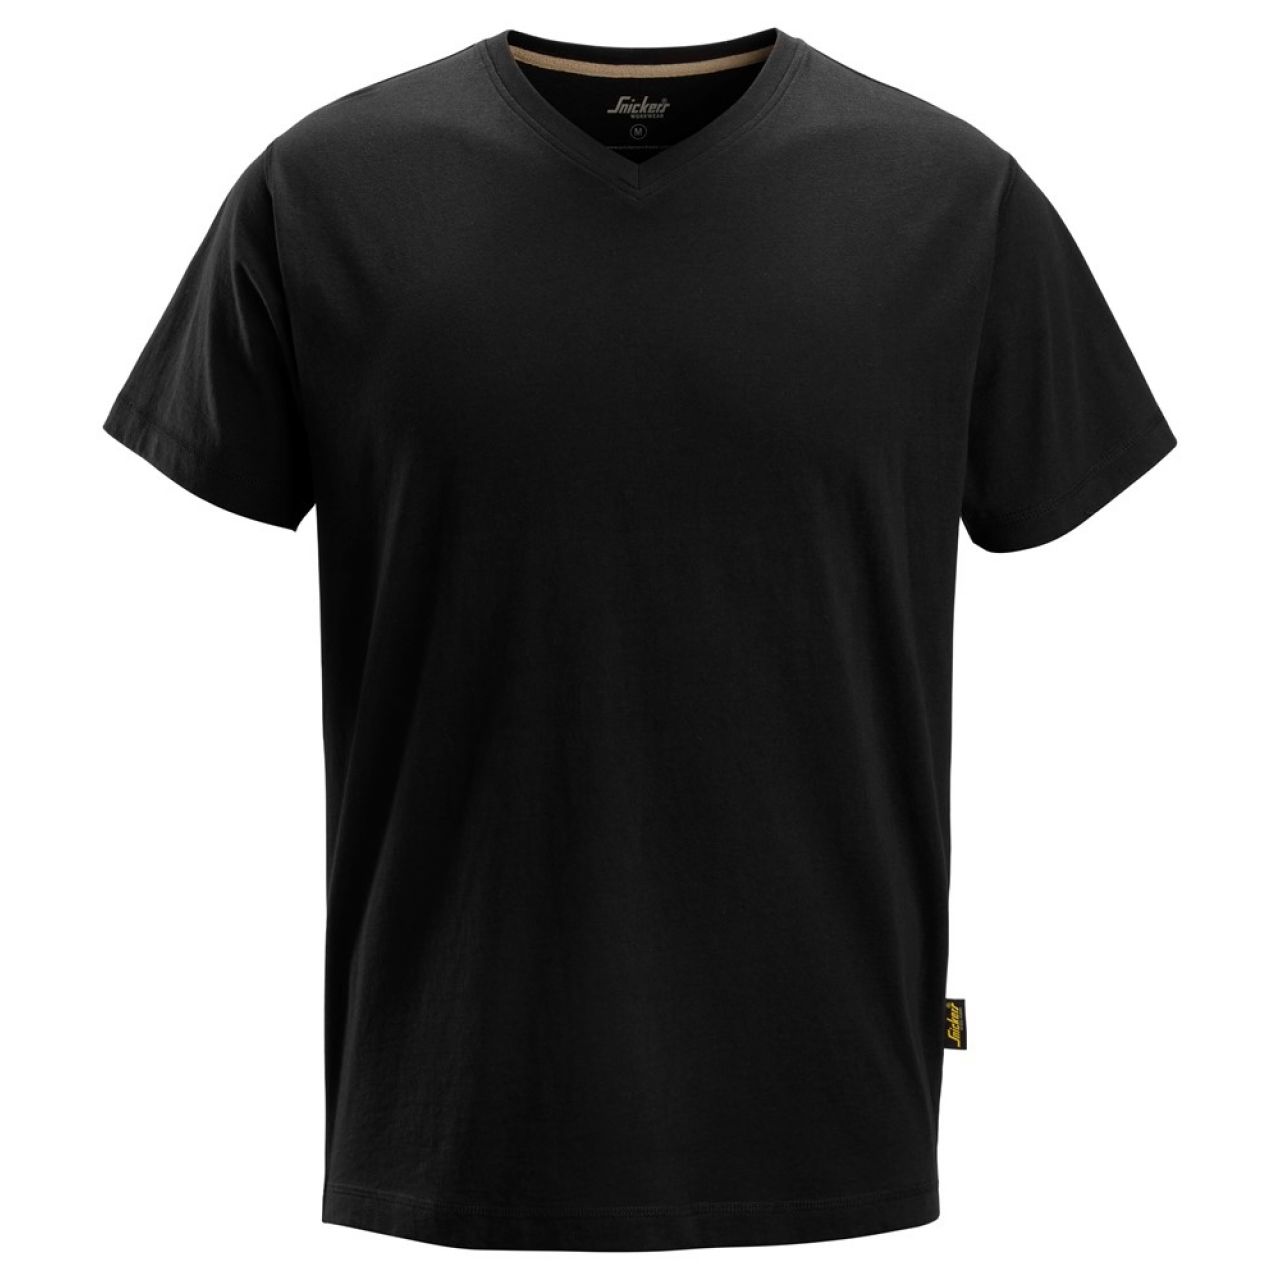 2512 Camiseta de manga corta con cuello en V negro talla M